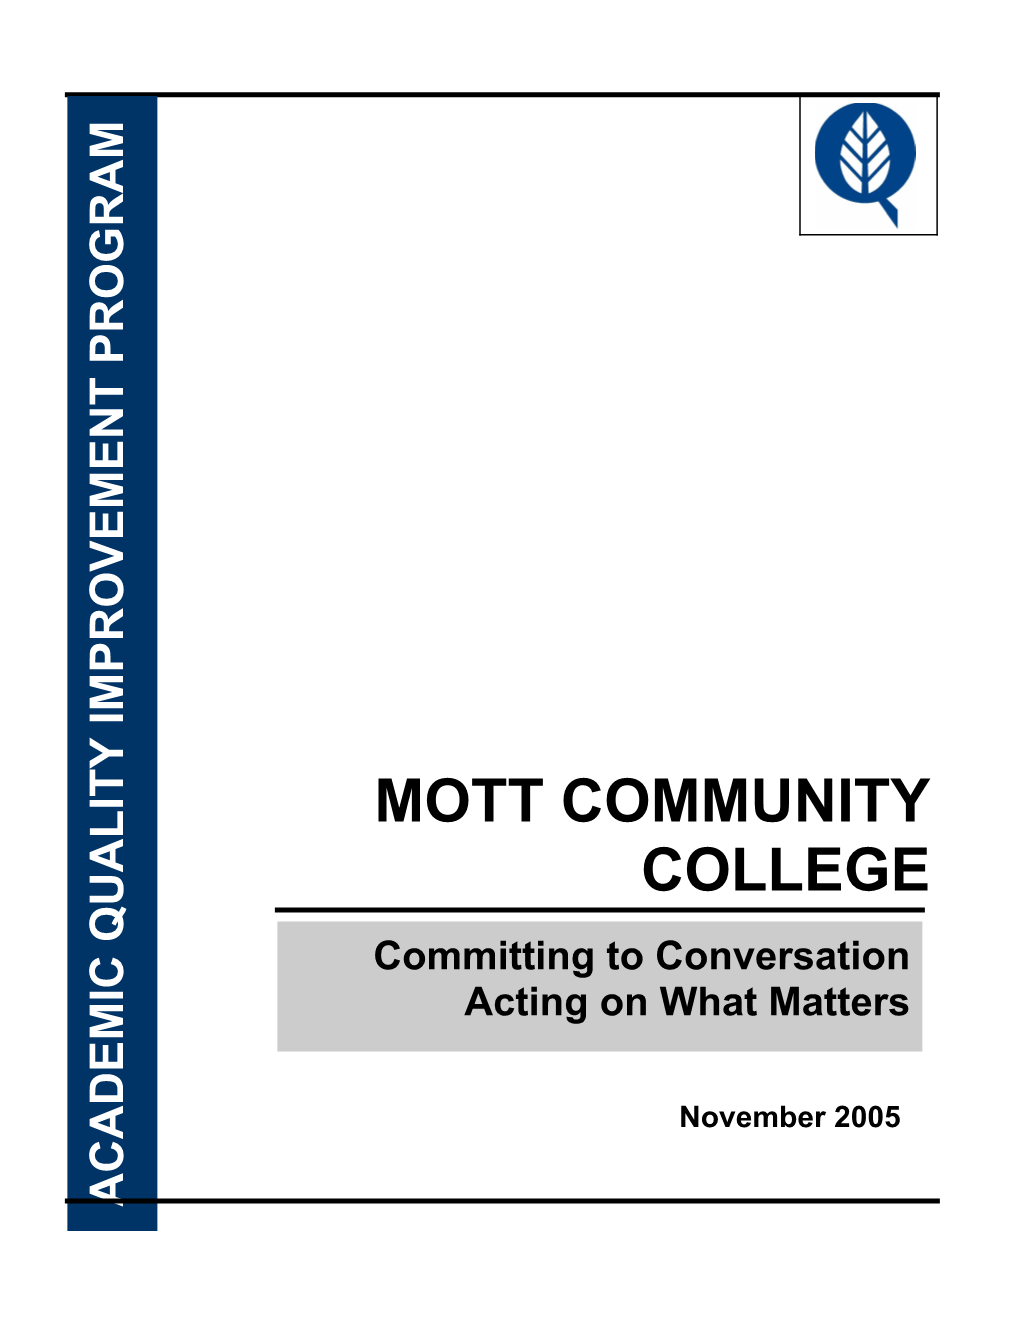 Mottcommunity College